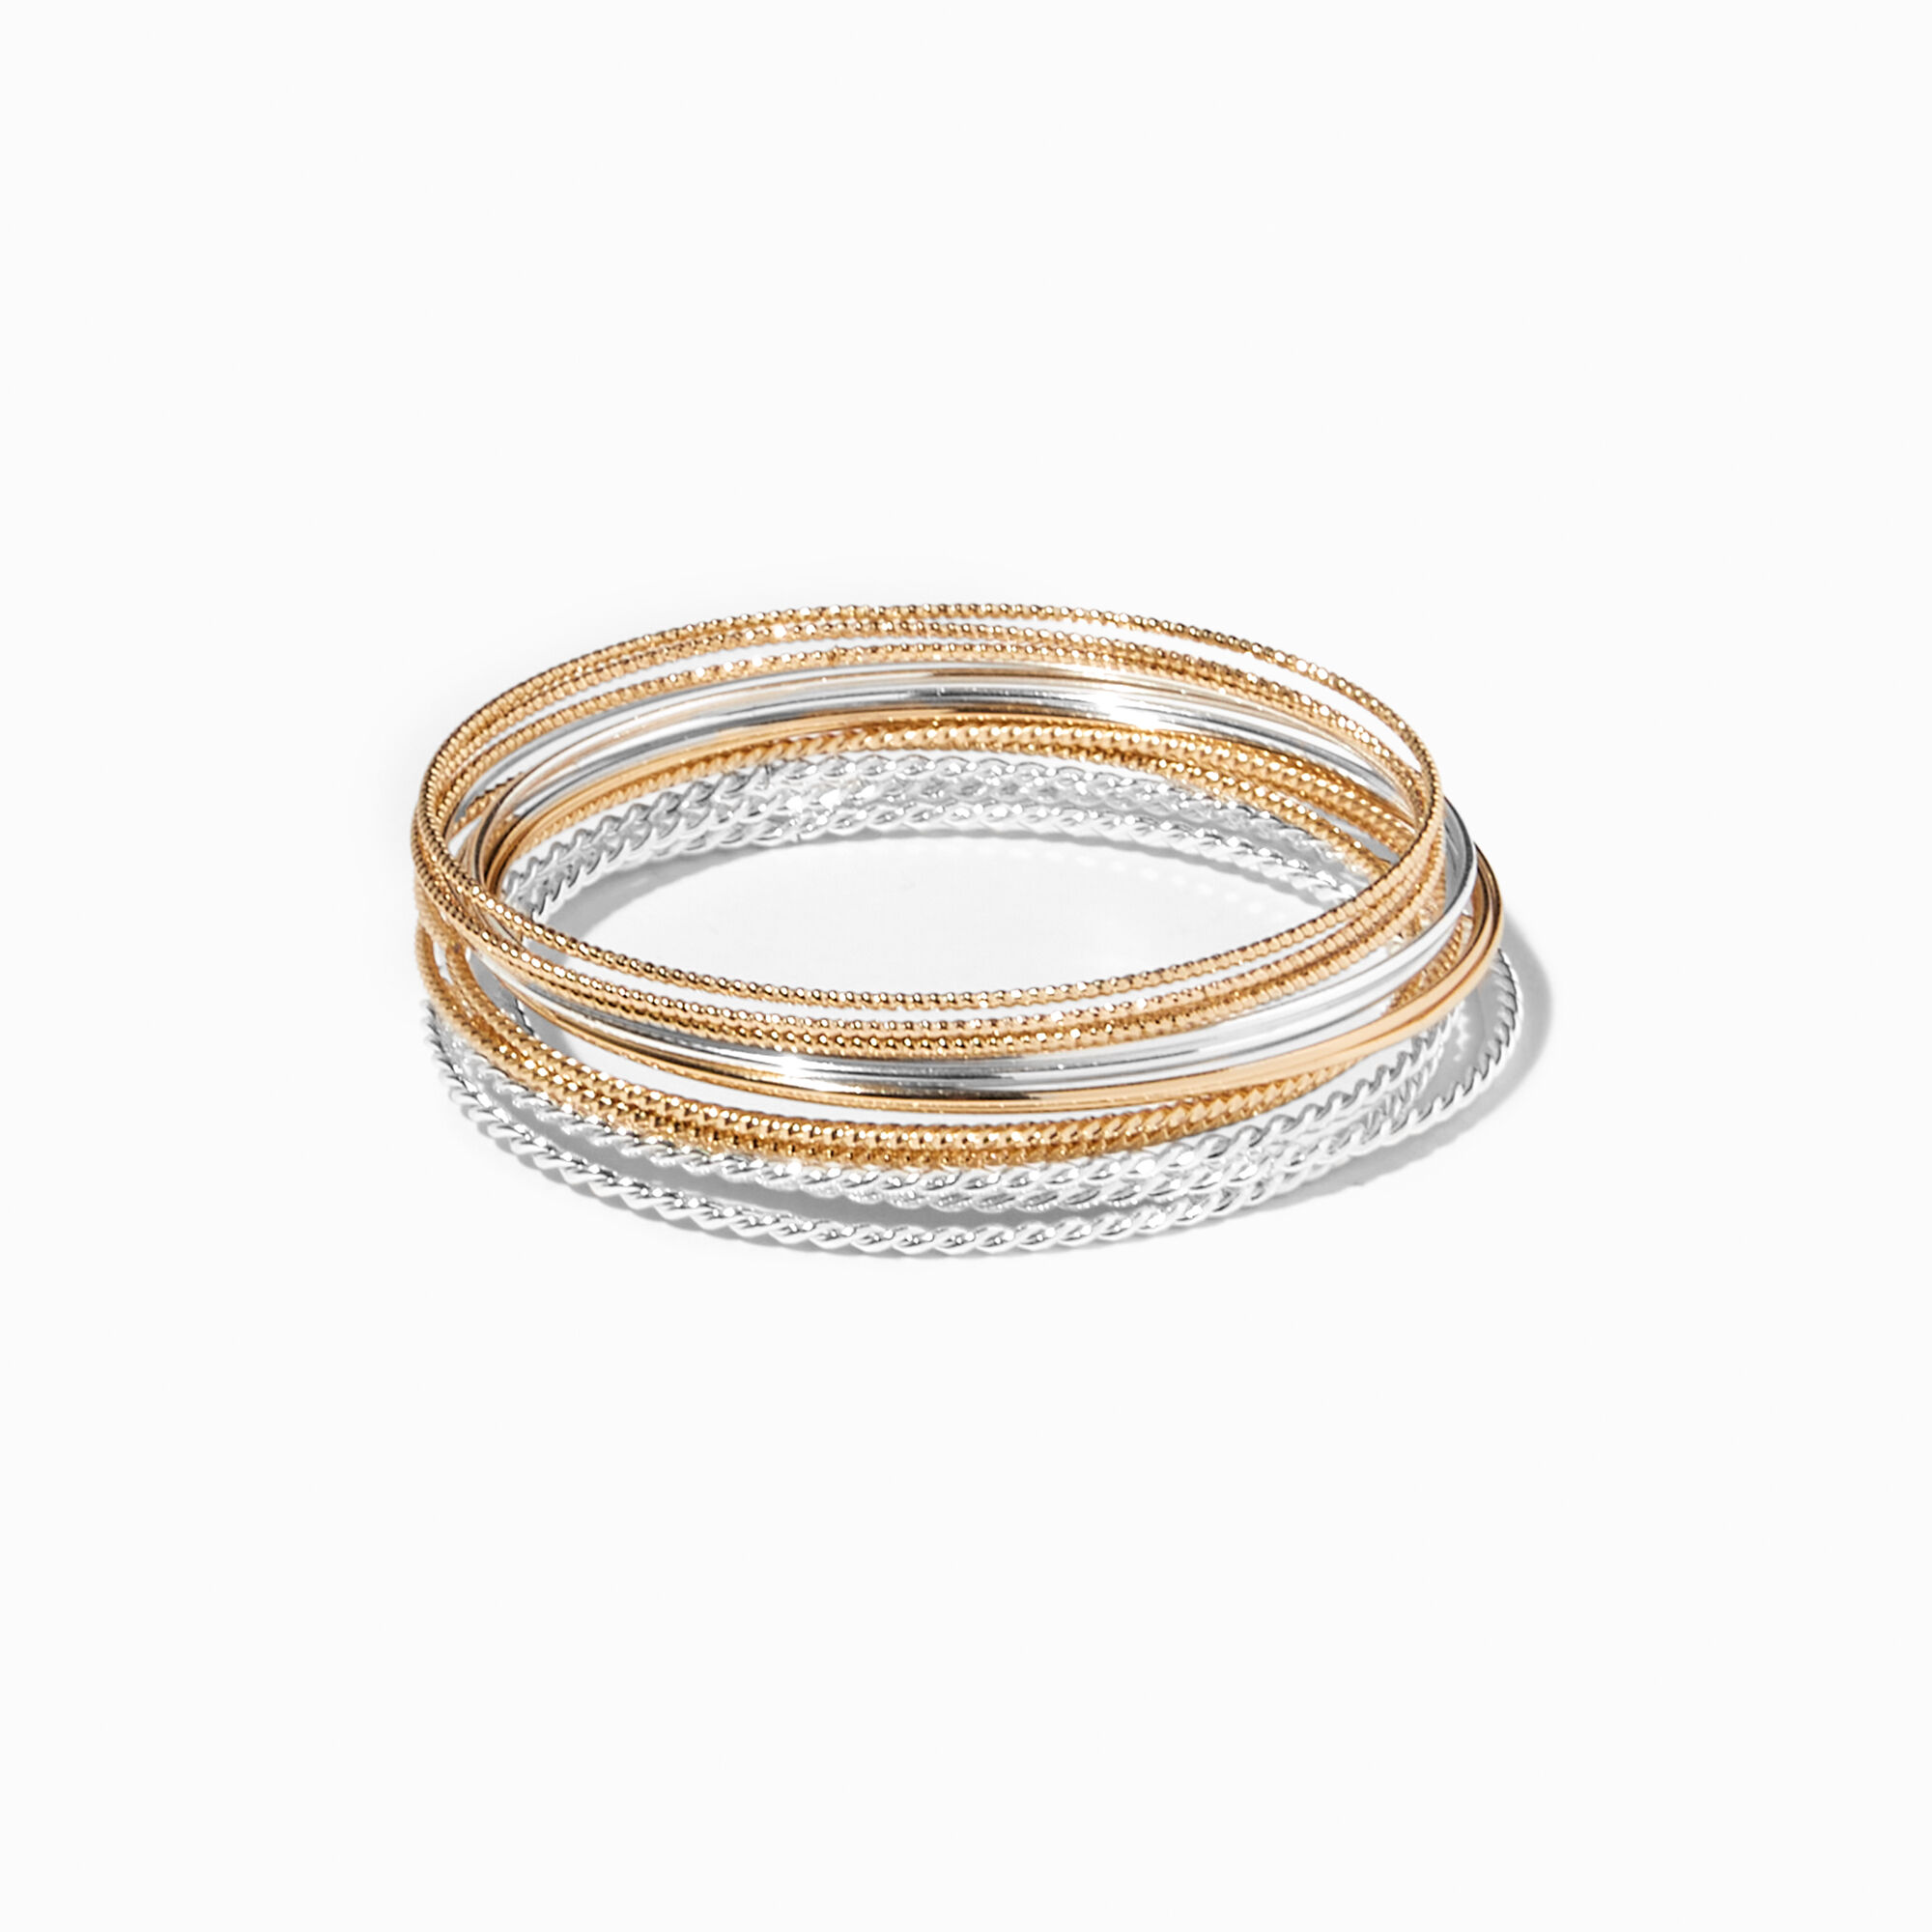 Gold & Silver Bangle Bracelets - 15 Pack